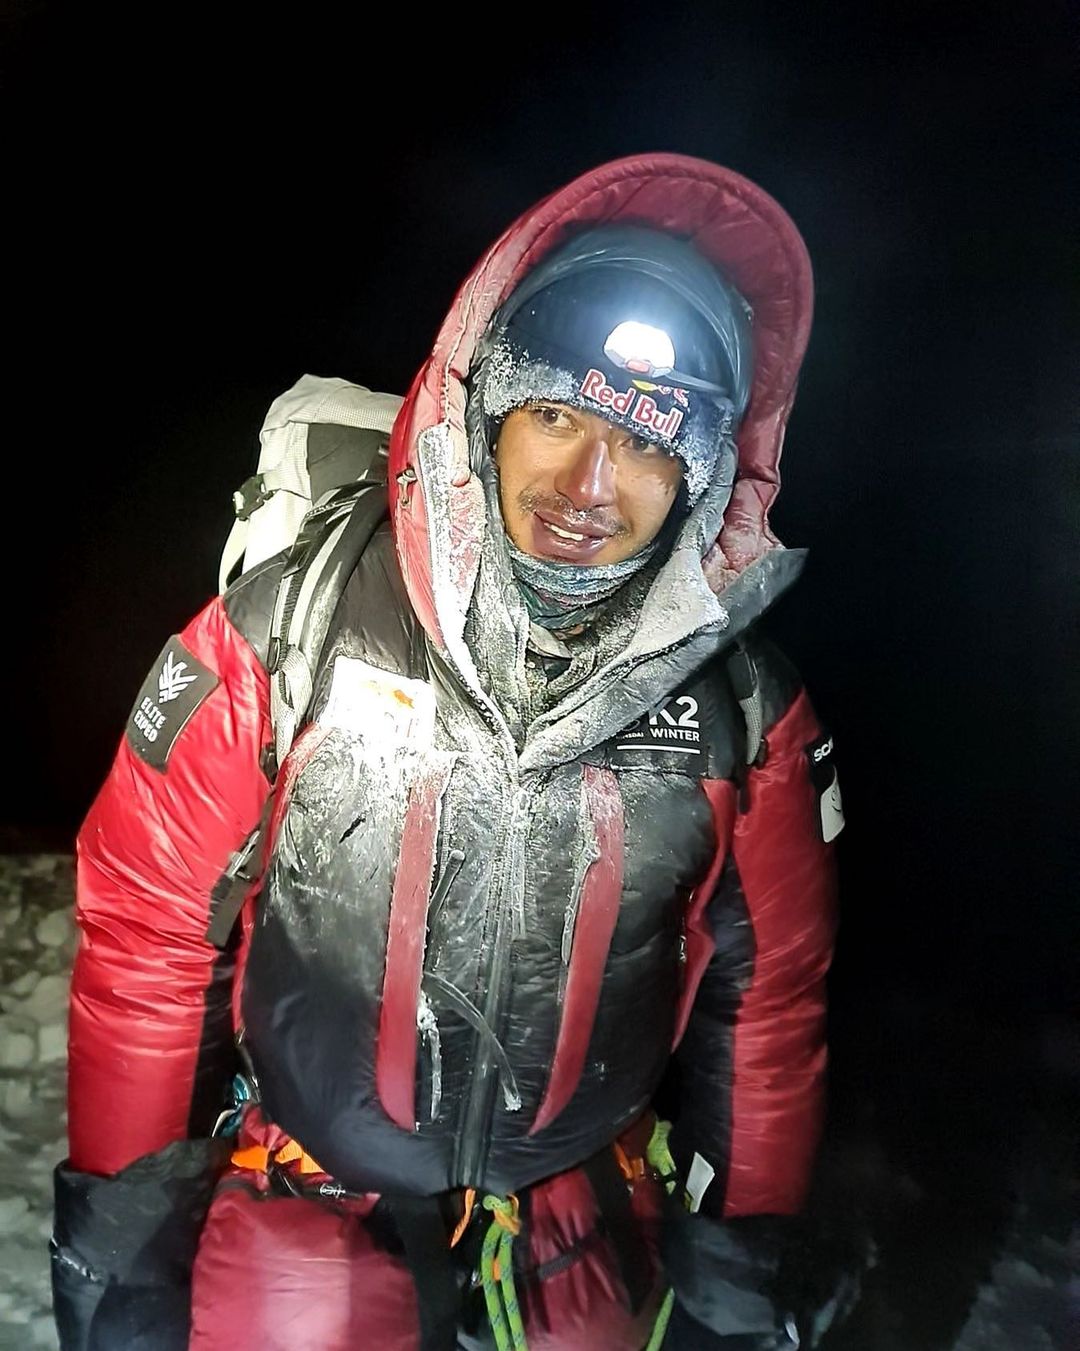 Нирмал Пурджа (Nirmal Purja) на спуске с восьмитысячника К2 без кислородной маски. 16 января 2021